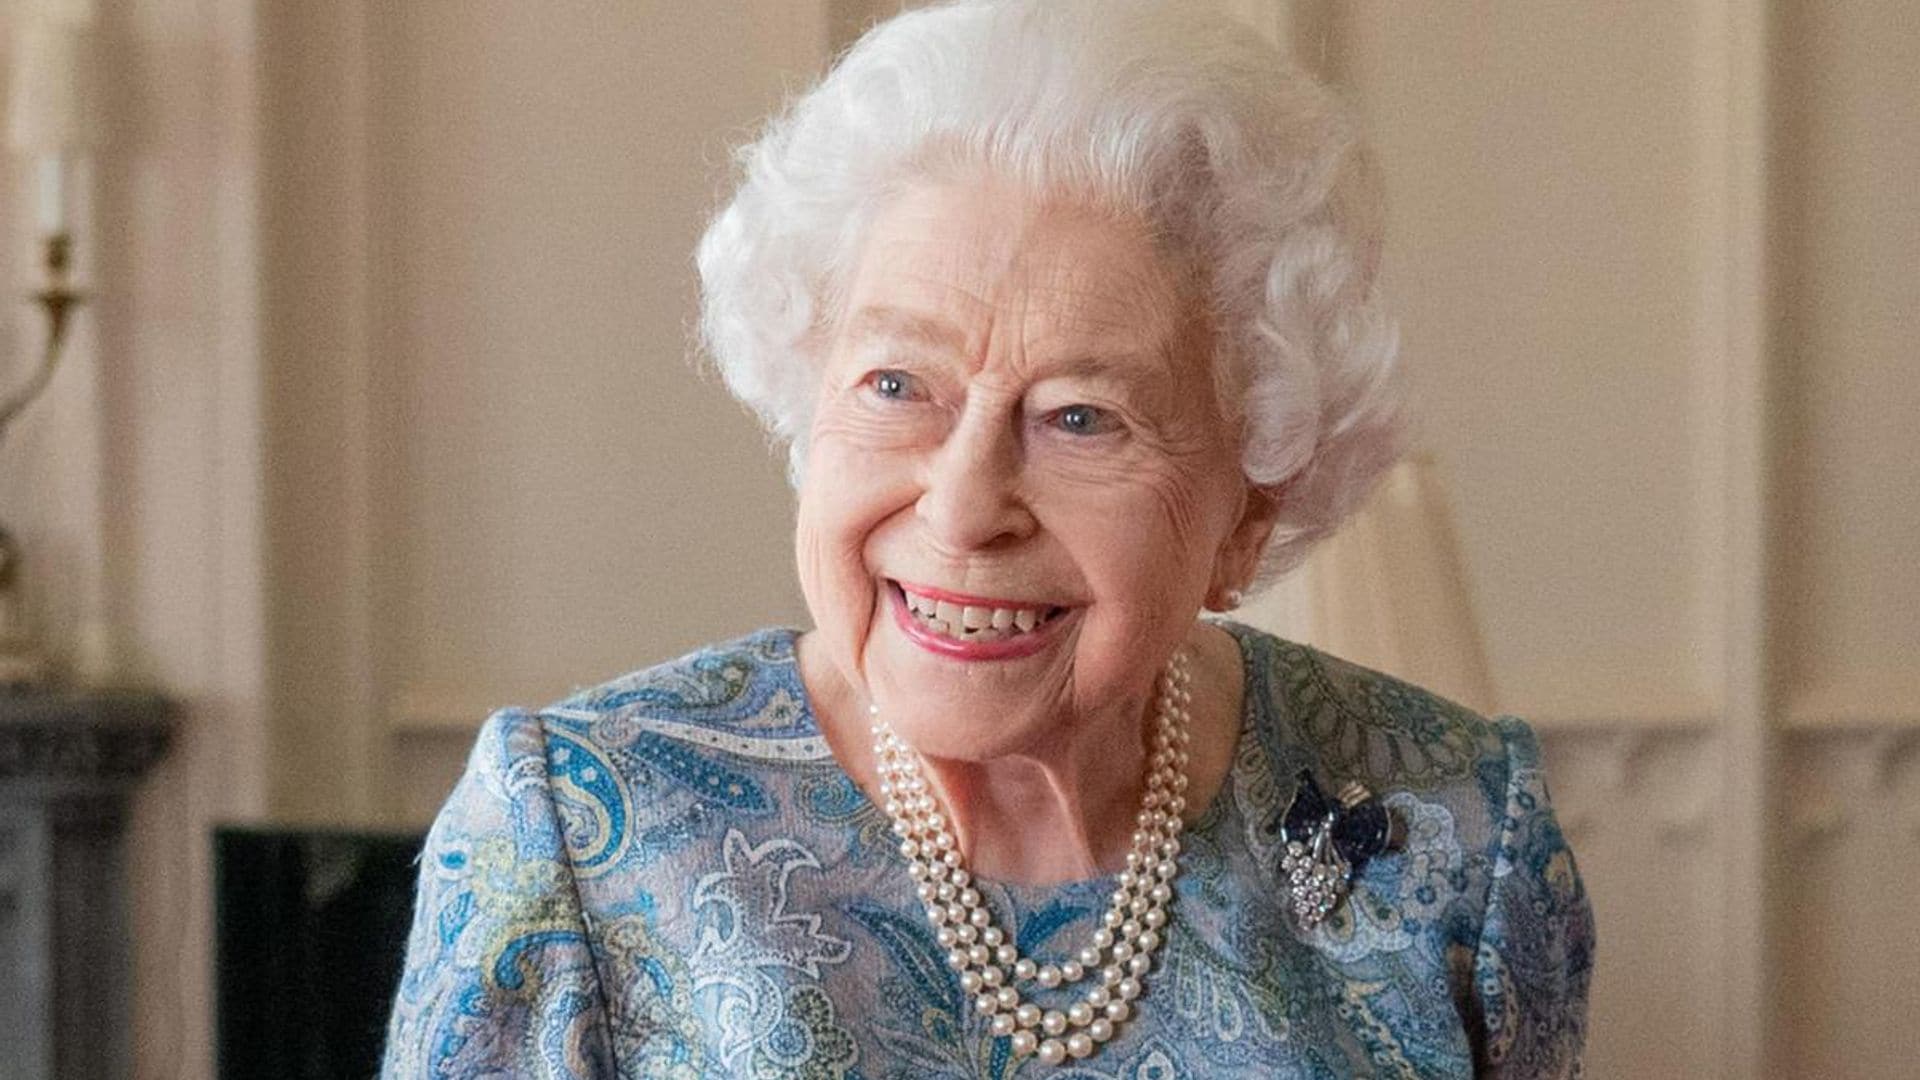 Queen Elizabeth's great-granddaughter christened: Details